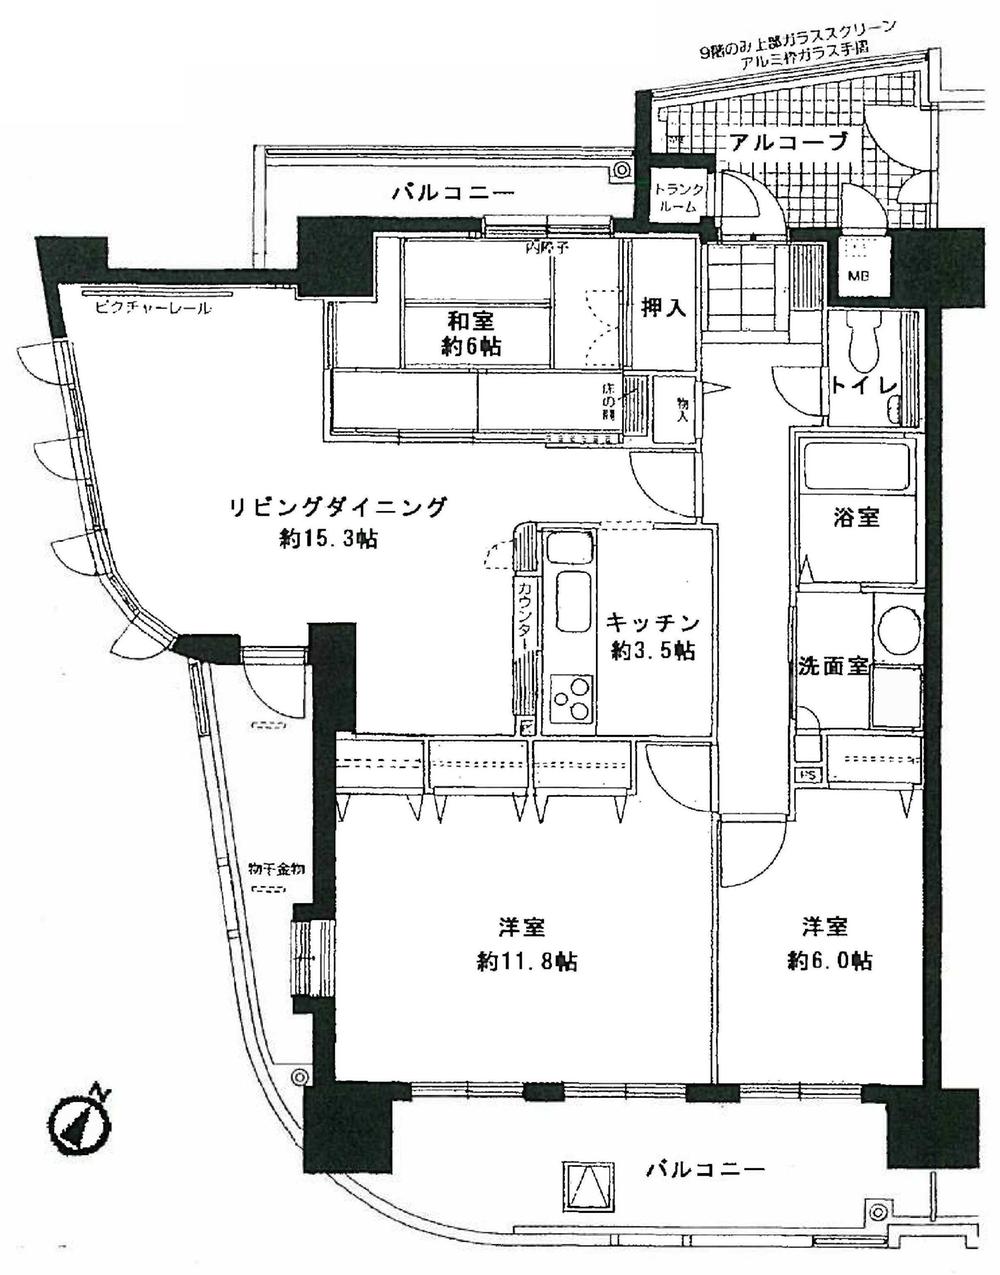 Floor plan. 3LDK, Price 21 million yen, Occupied area 92.01 sq m , Balcony area 23.84 sq m 9 floor of 3 direction room